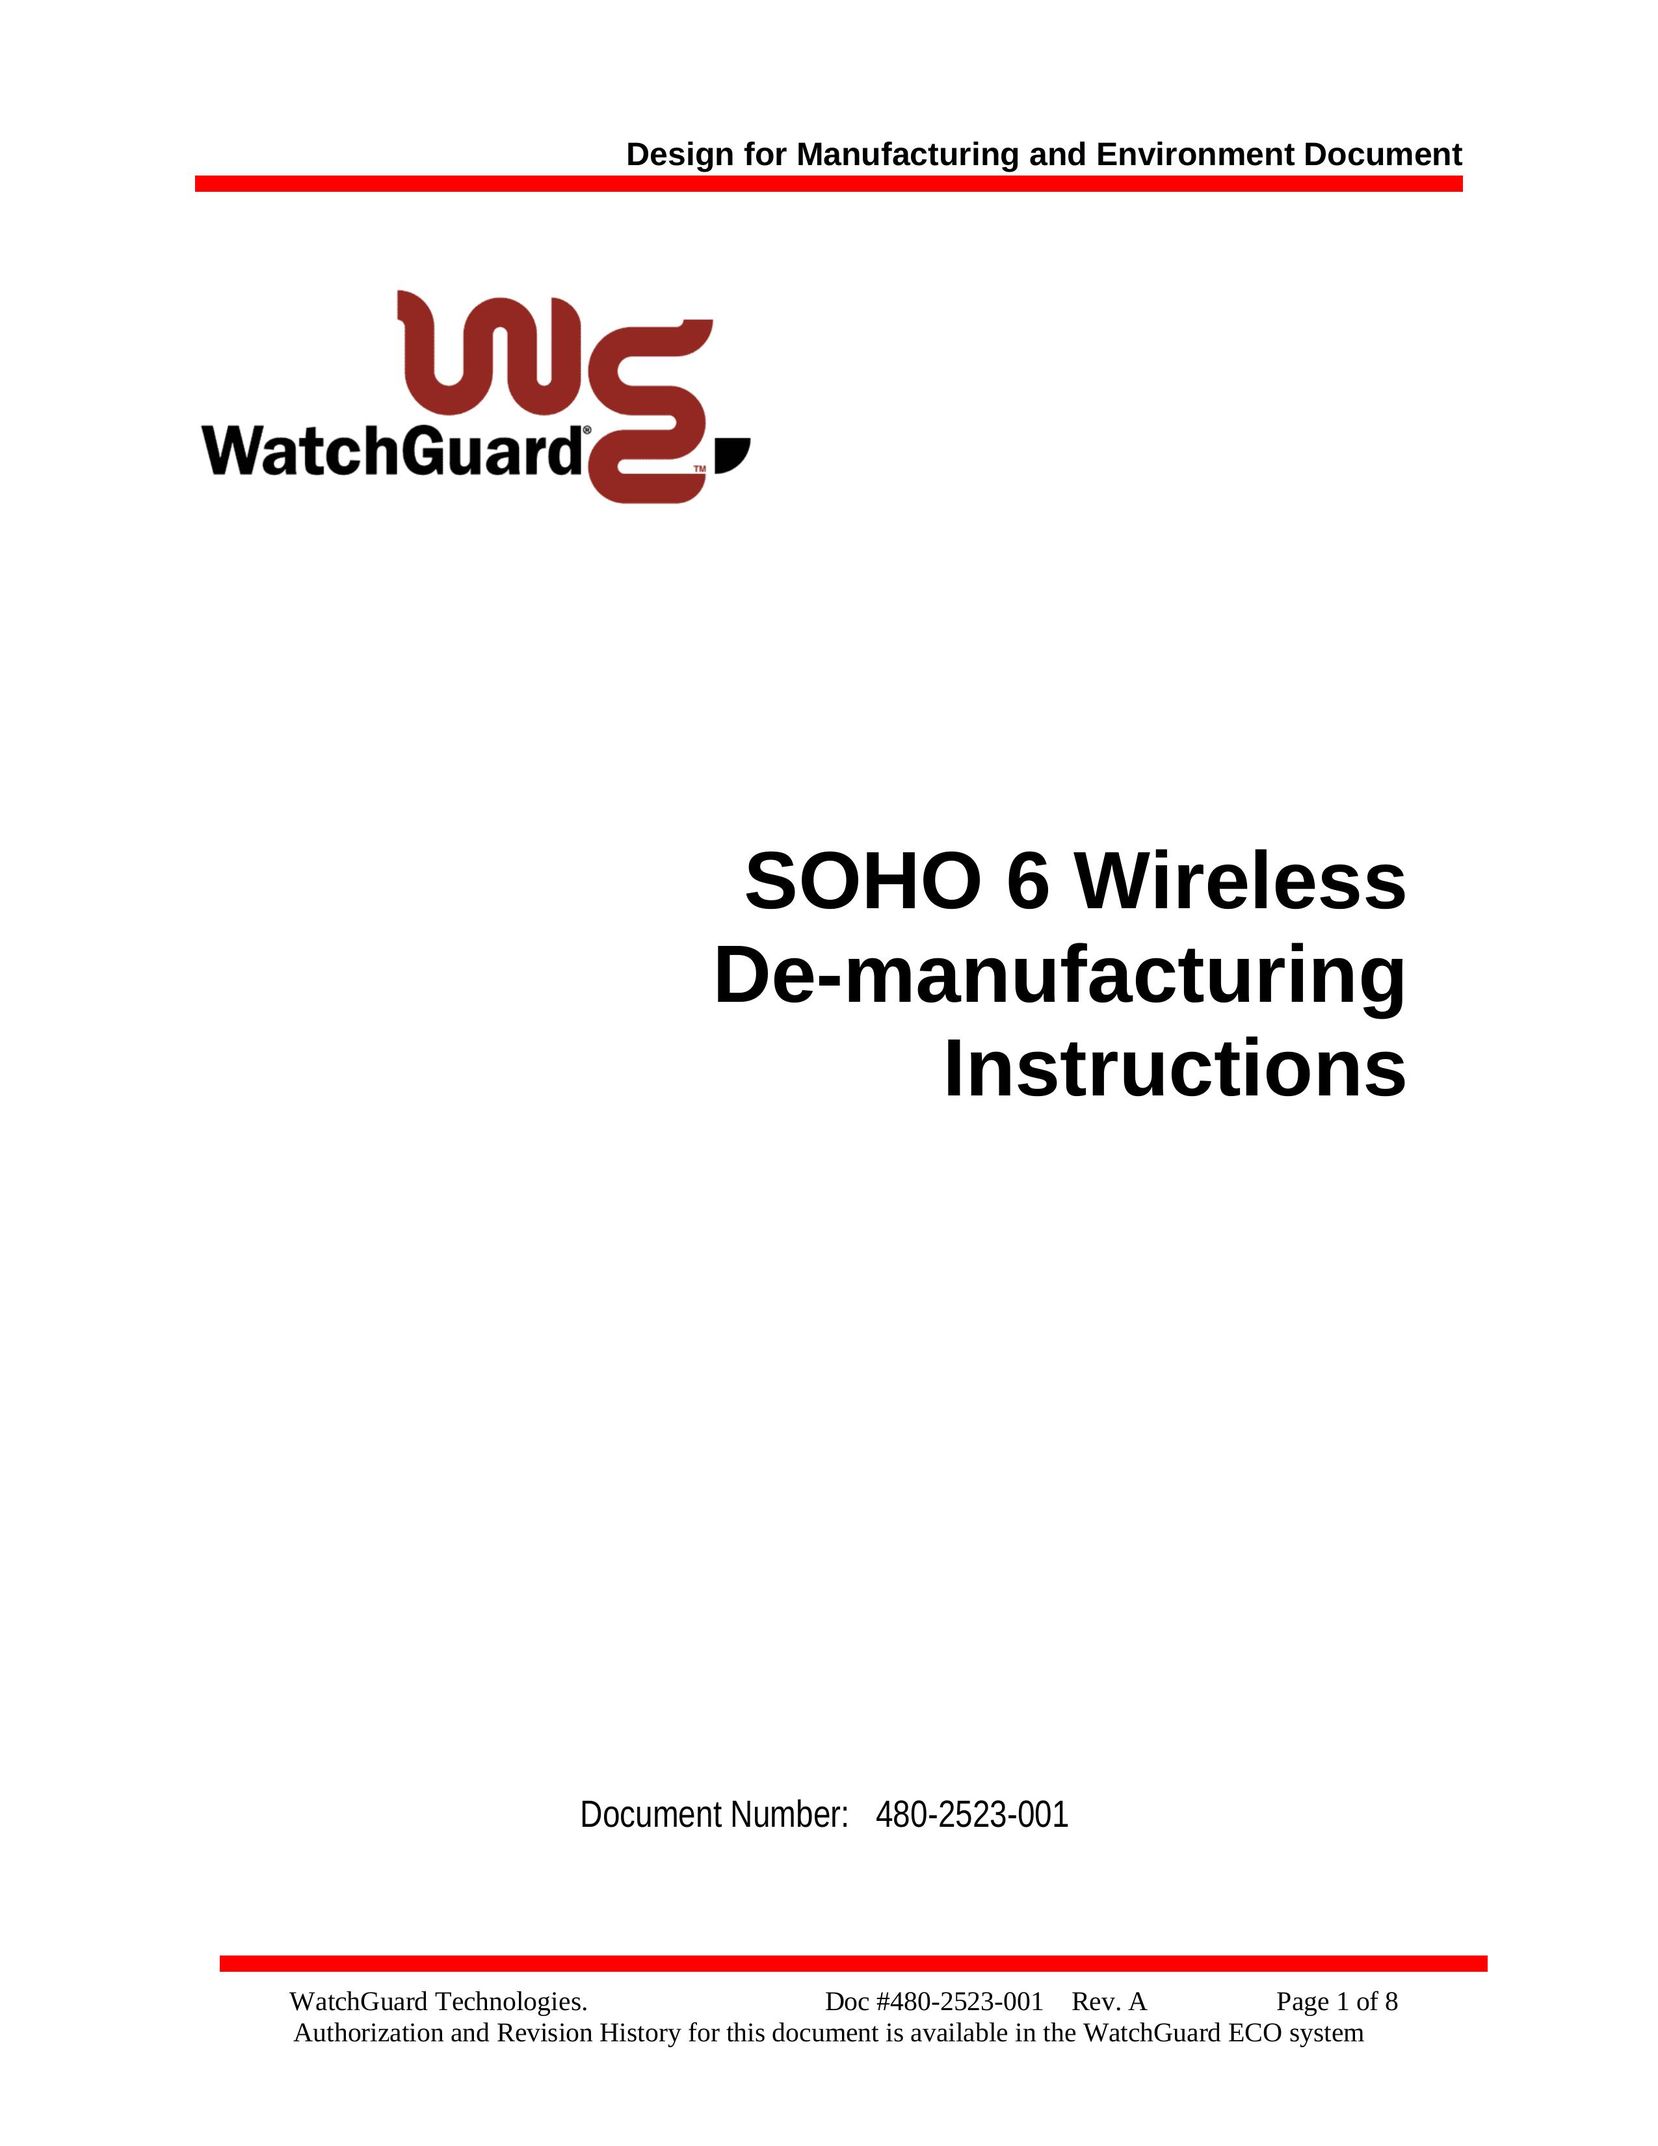 WatchGuard Technologies SOHO 6 Network Router User Manual